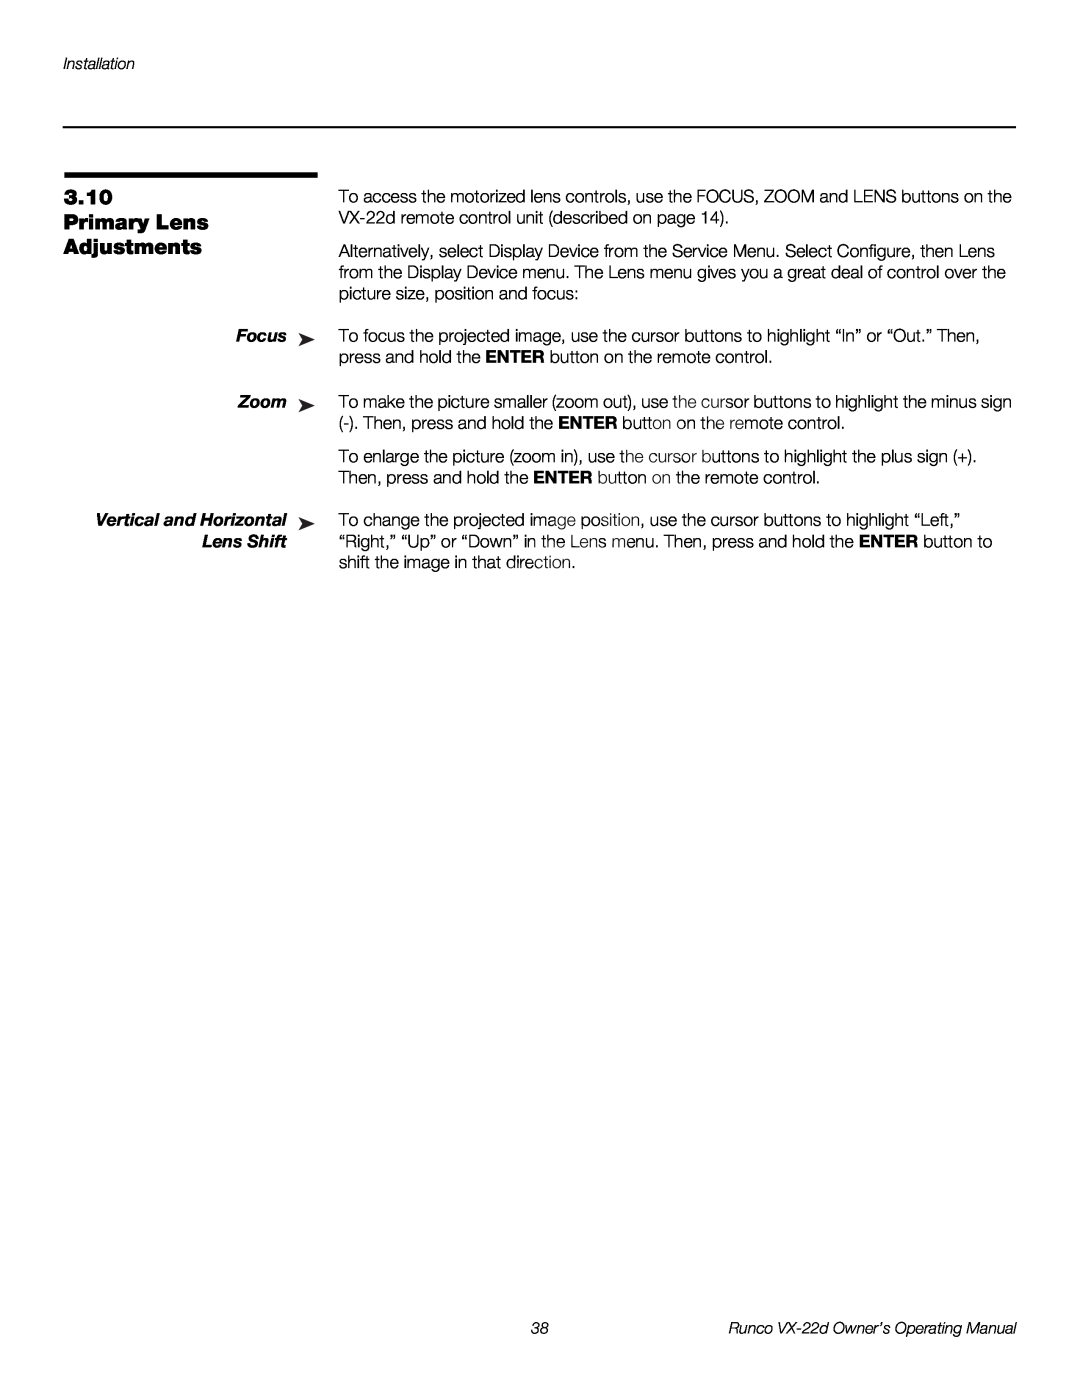 Runco VX-22D manual 3.10, Primary Lens, Adjustments, Focus, Zoom, Vertical and Horizontal, Lens Shift 